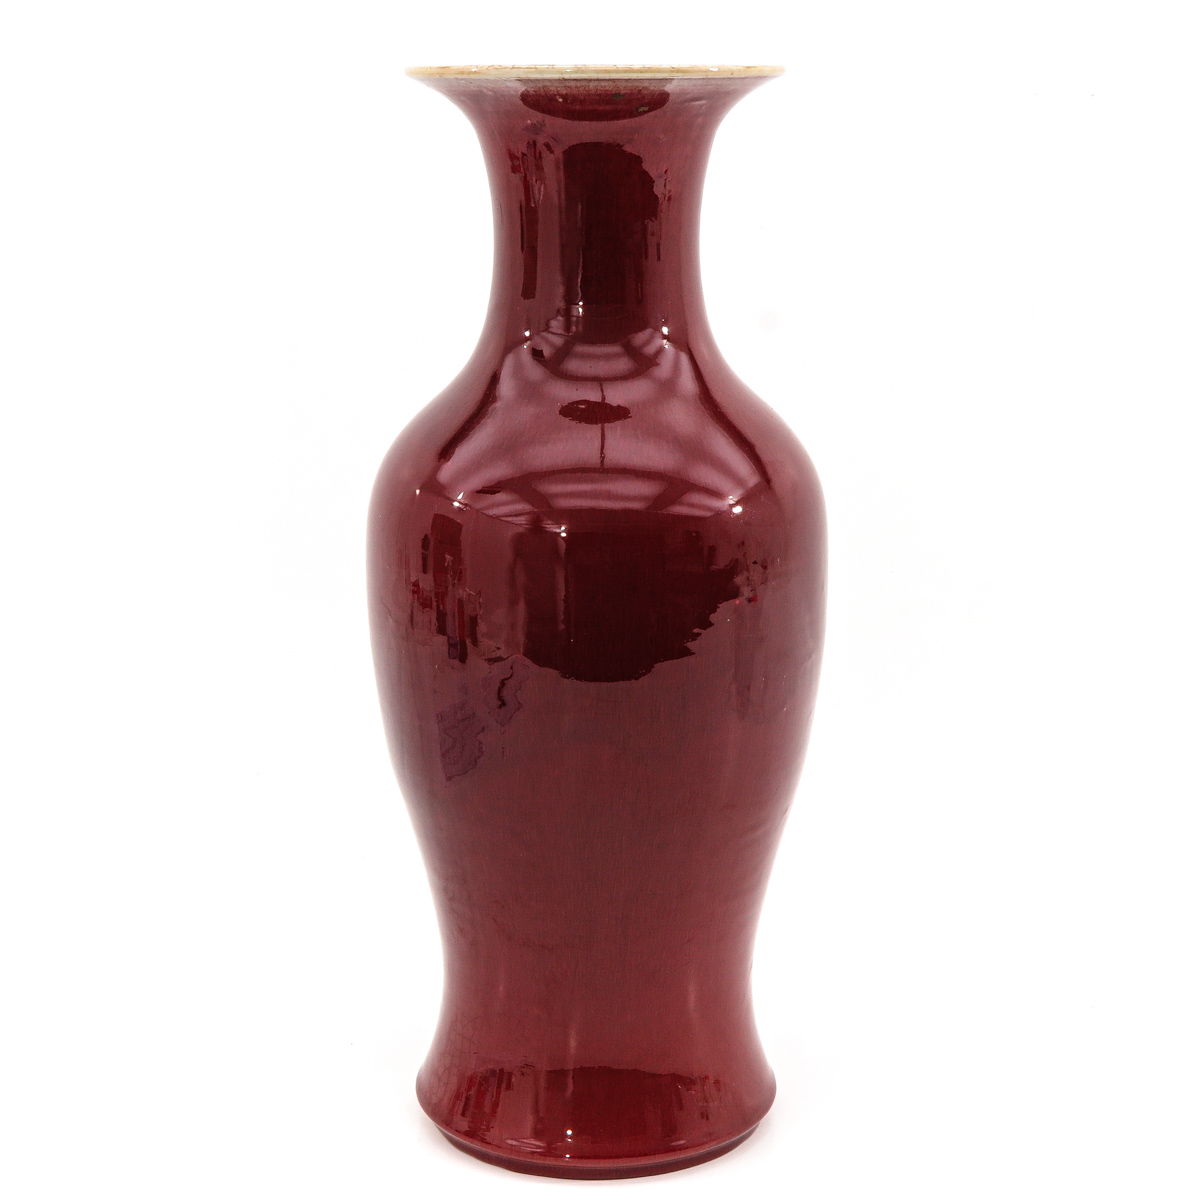 A Large Sang de Boeuf Vase - Image 4 of 8